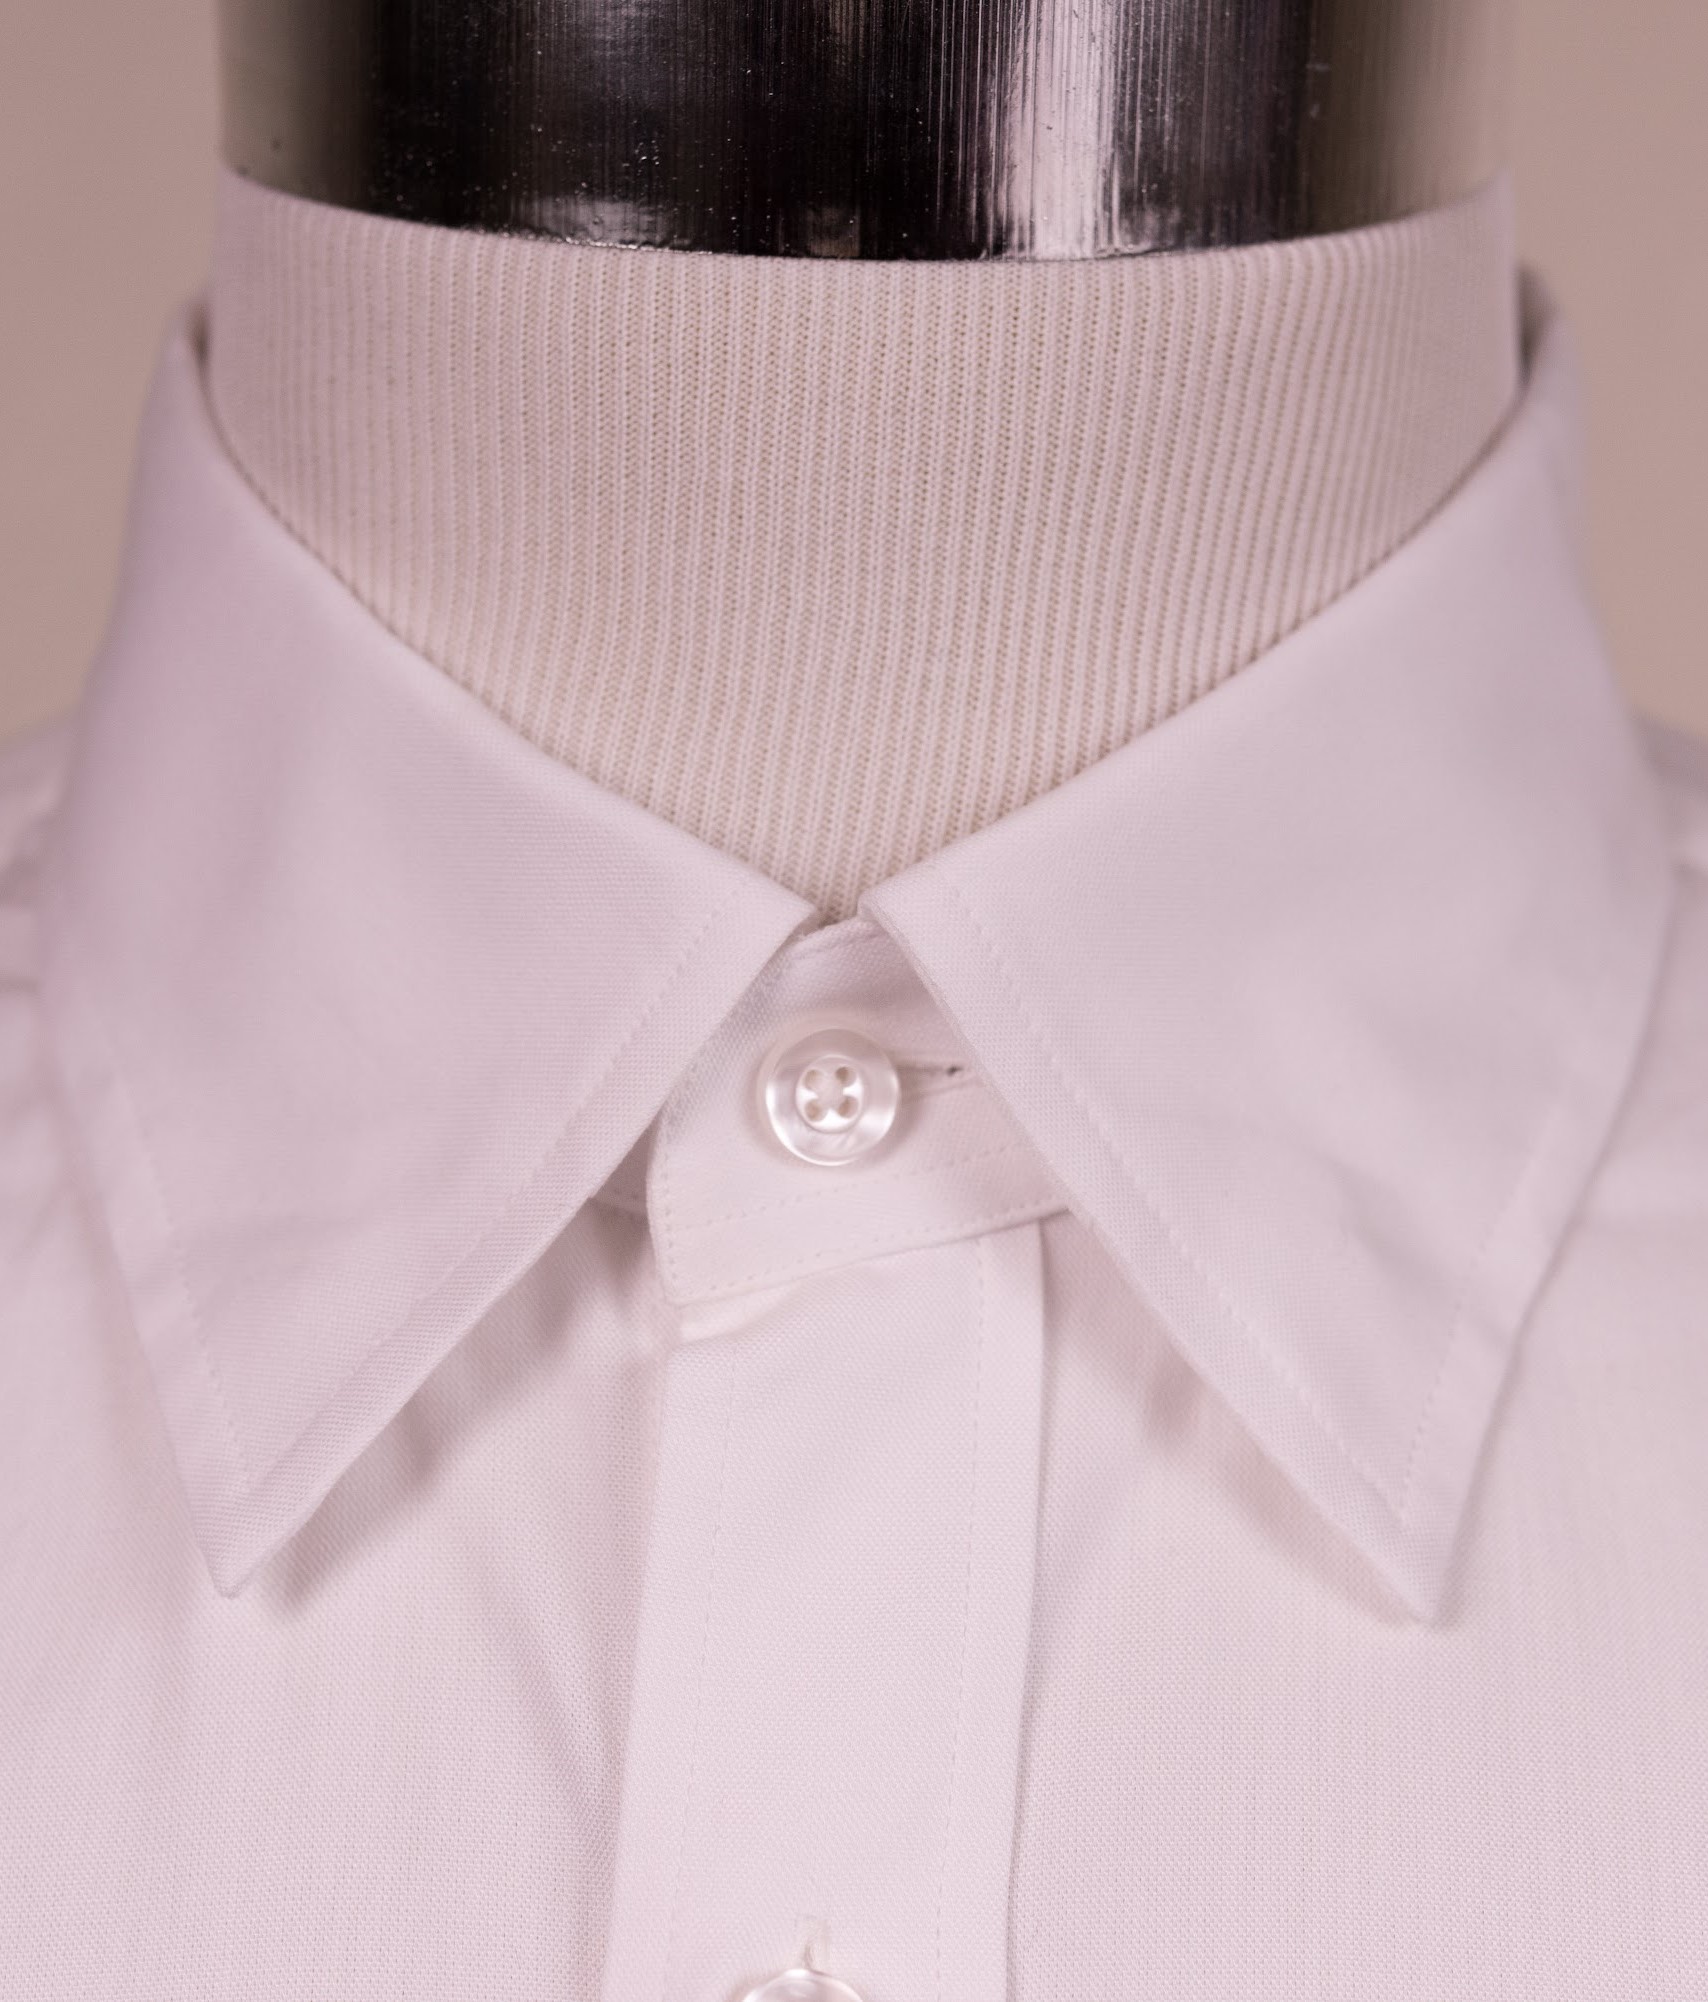 Avoid narrow collars when wearing the half Windsor Knot